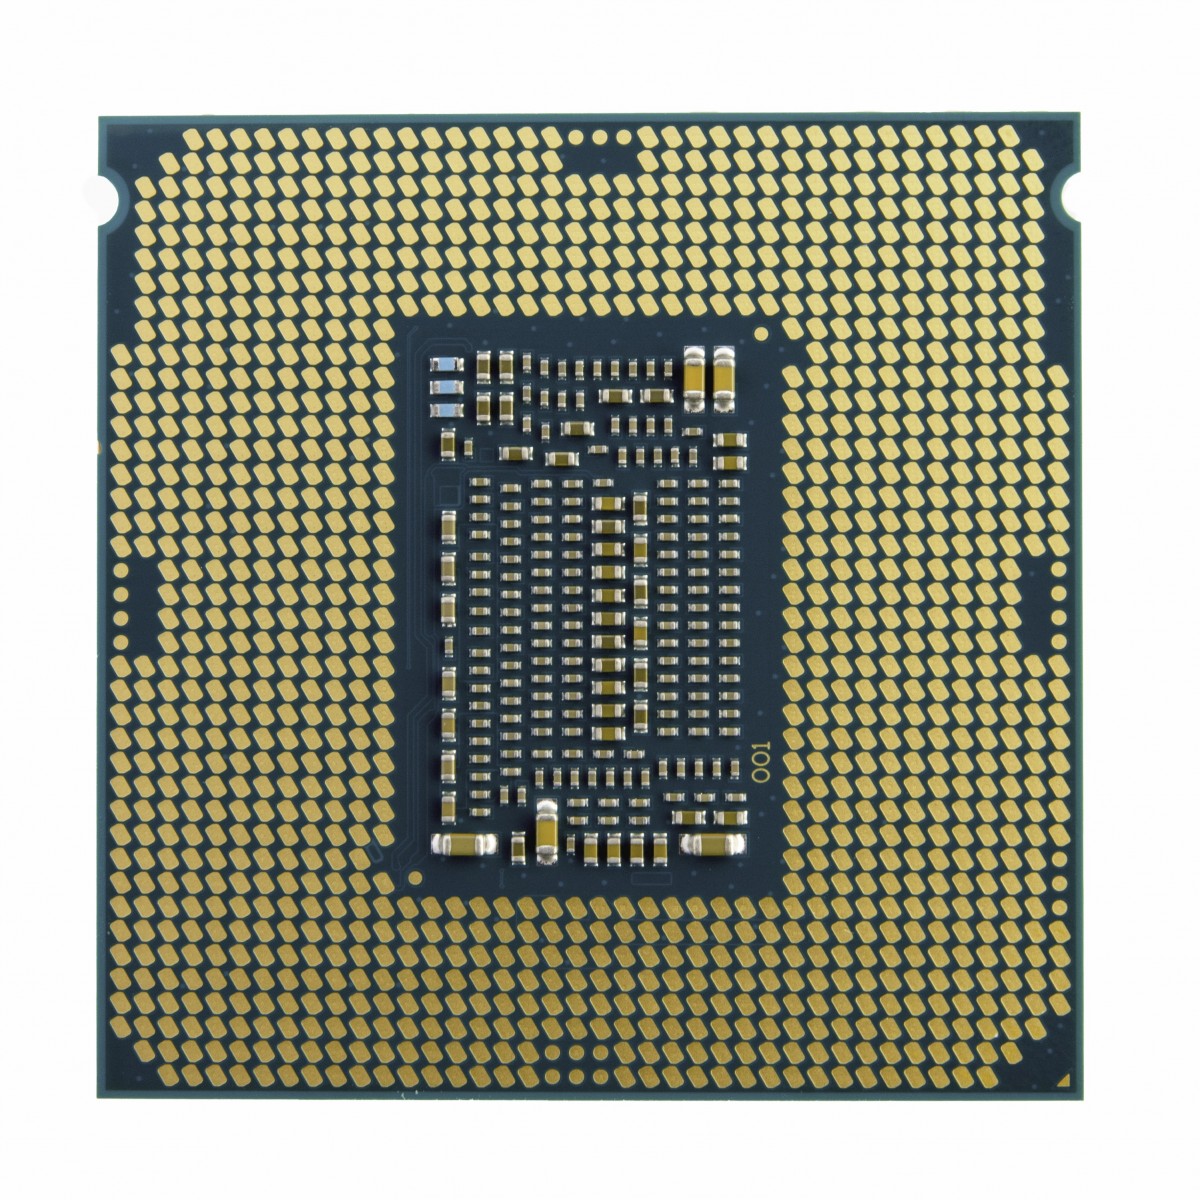 Intel Xeon E-2236